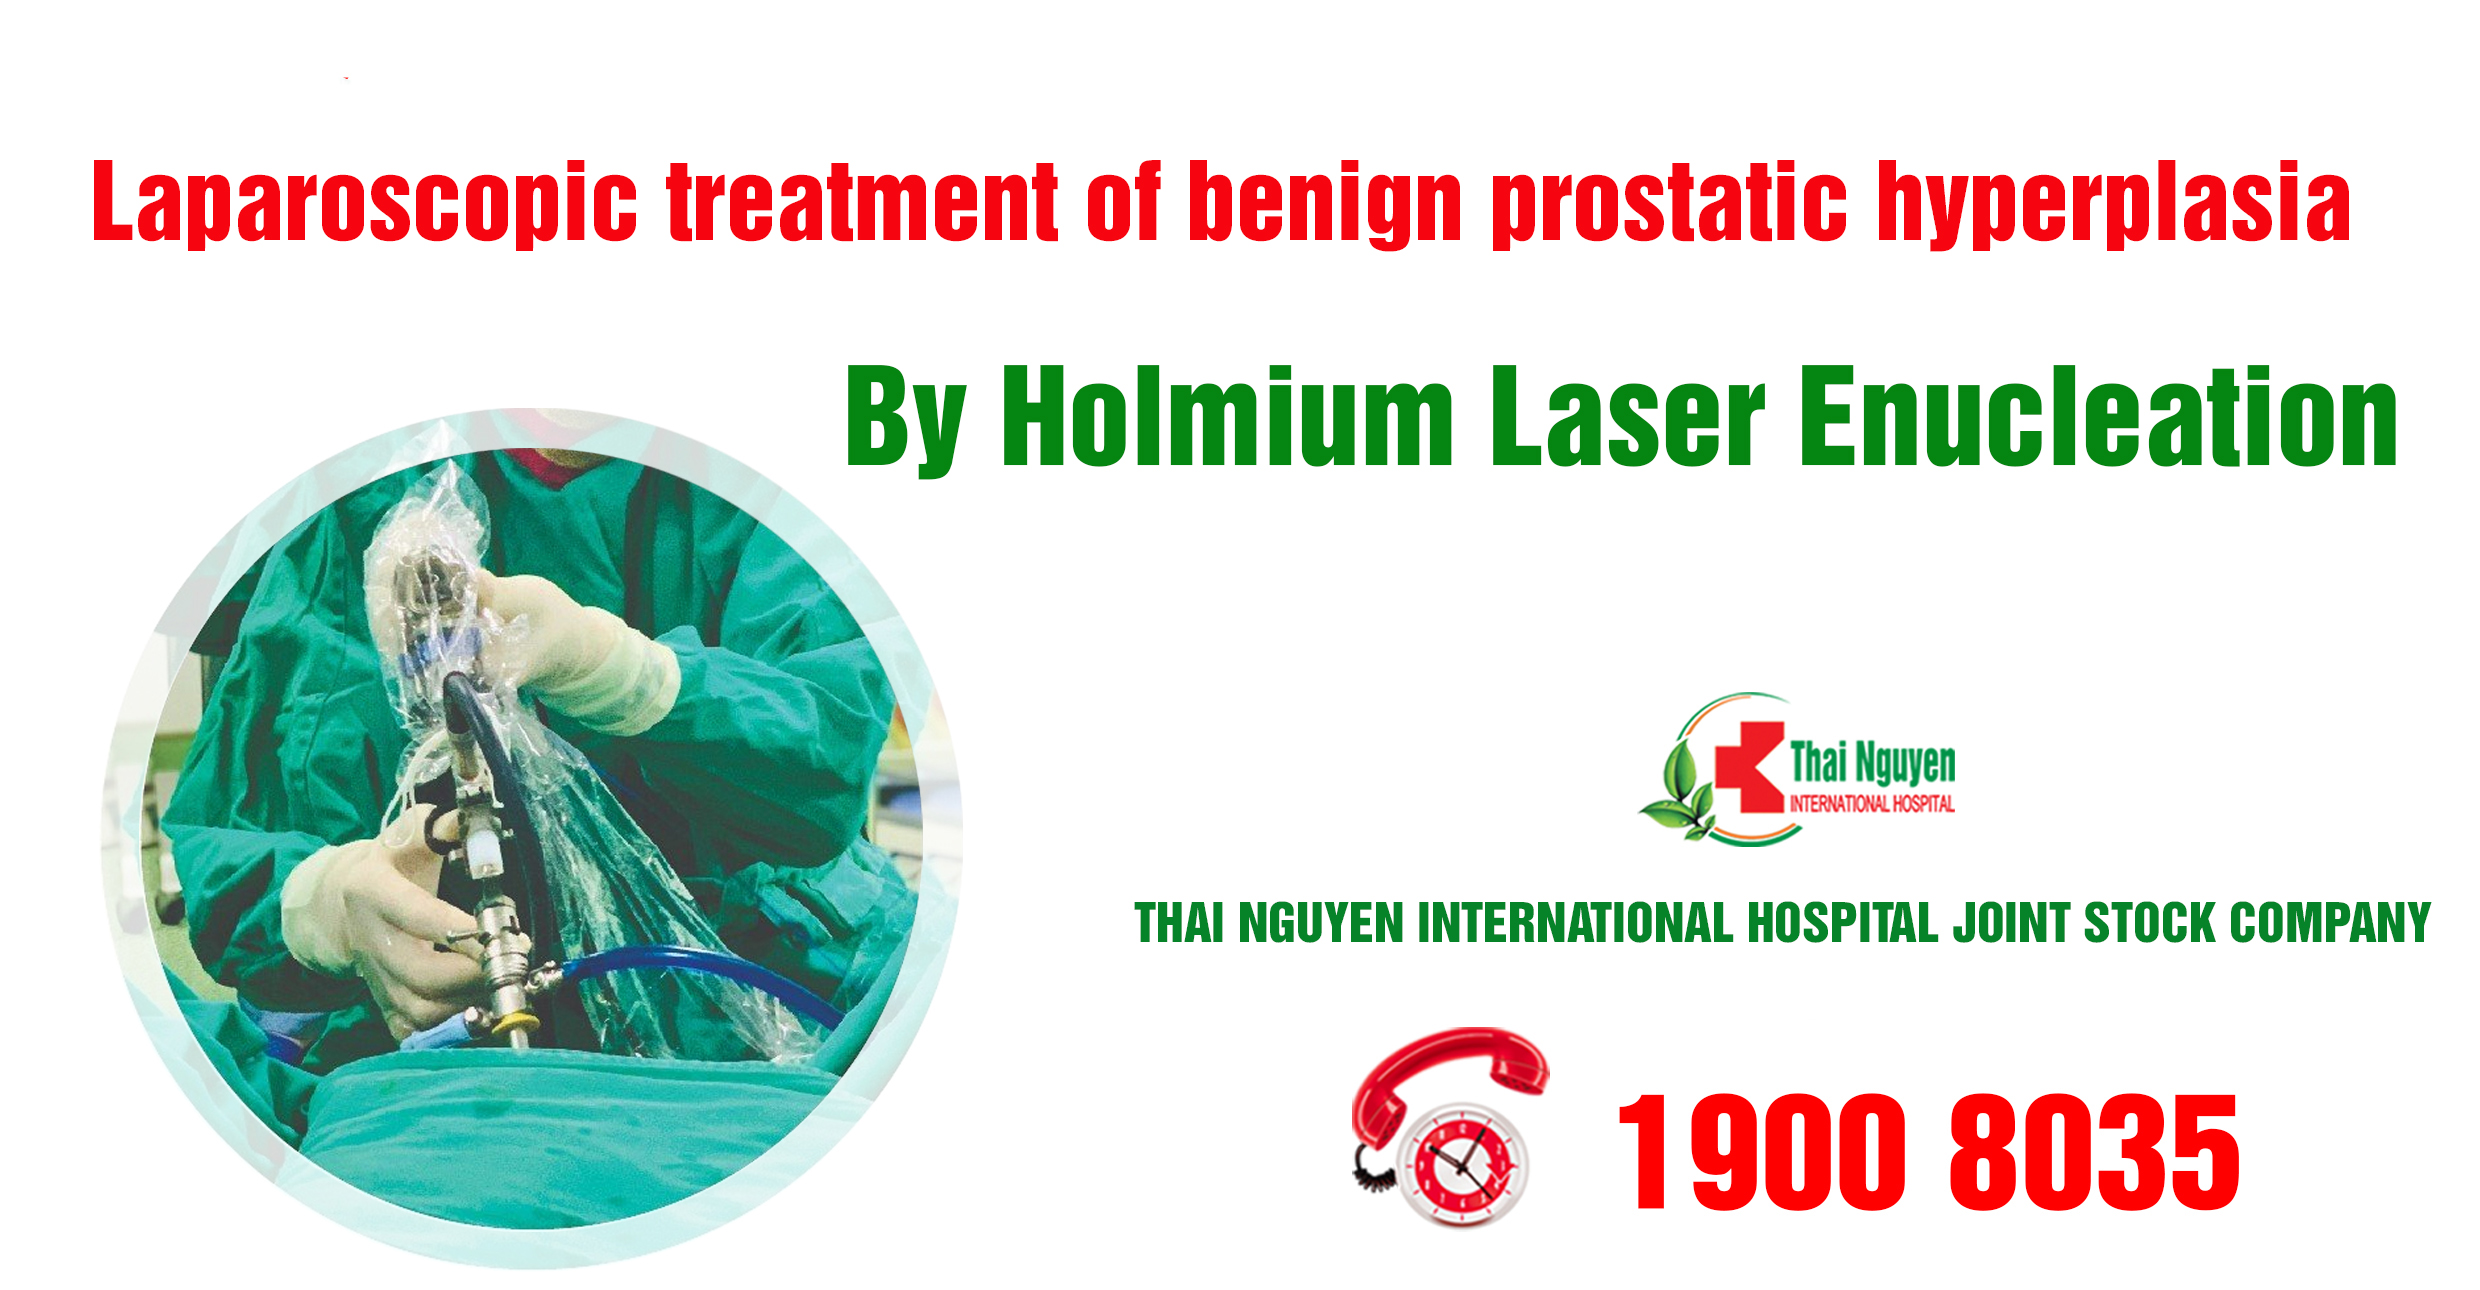 LAPAROSCOPIC TREATMENT OF BENIGN PROSTATIC HYPERPLASIA BY HOLMIUM LASER ENUCLEATION THAI